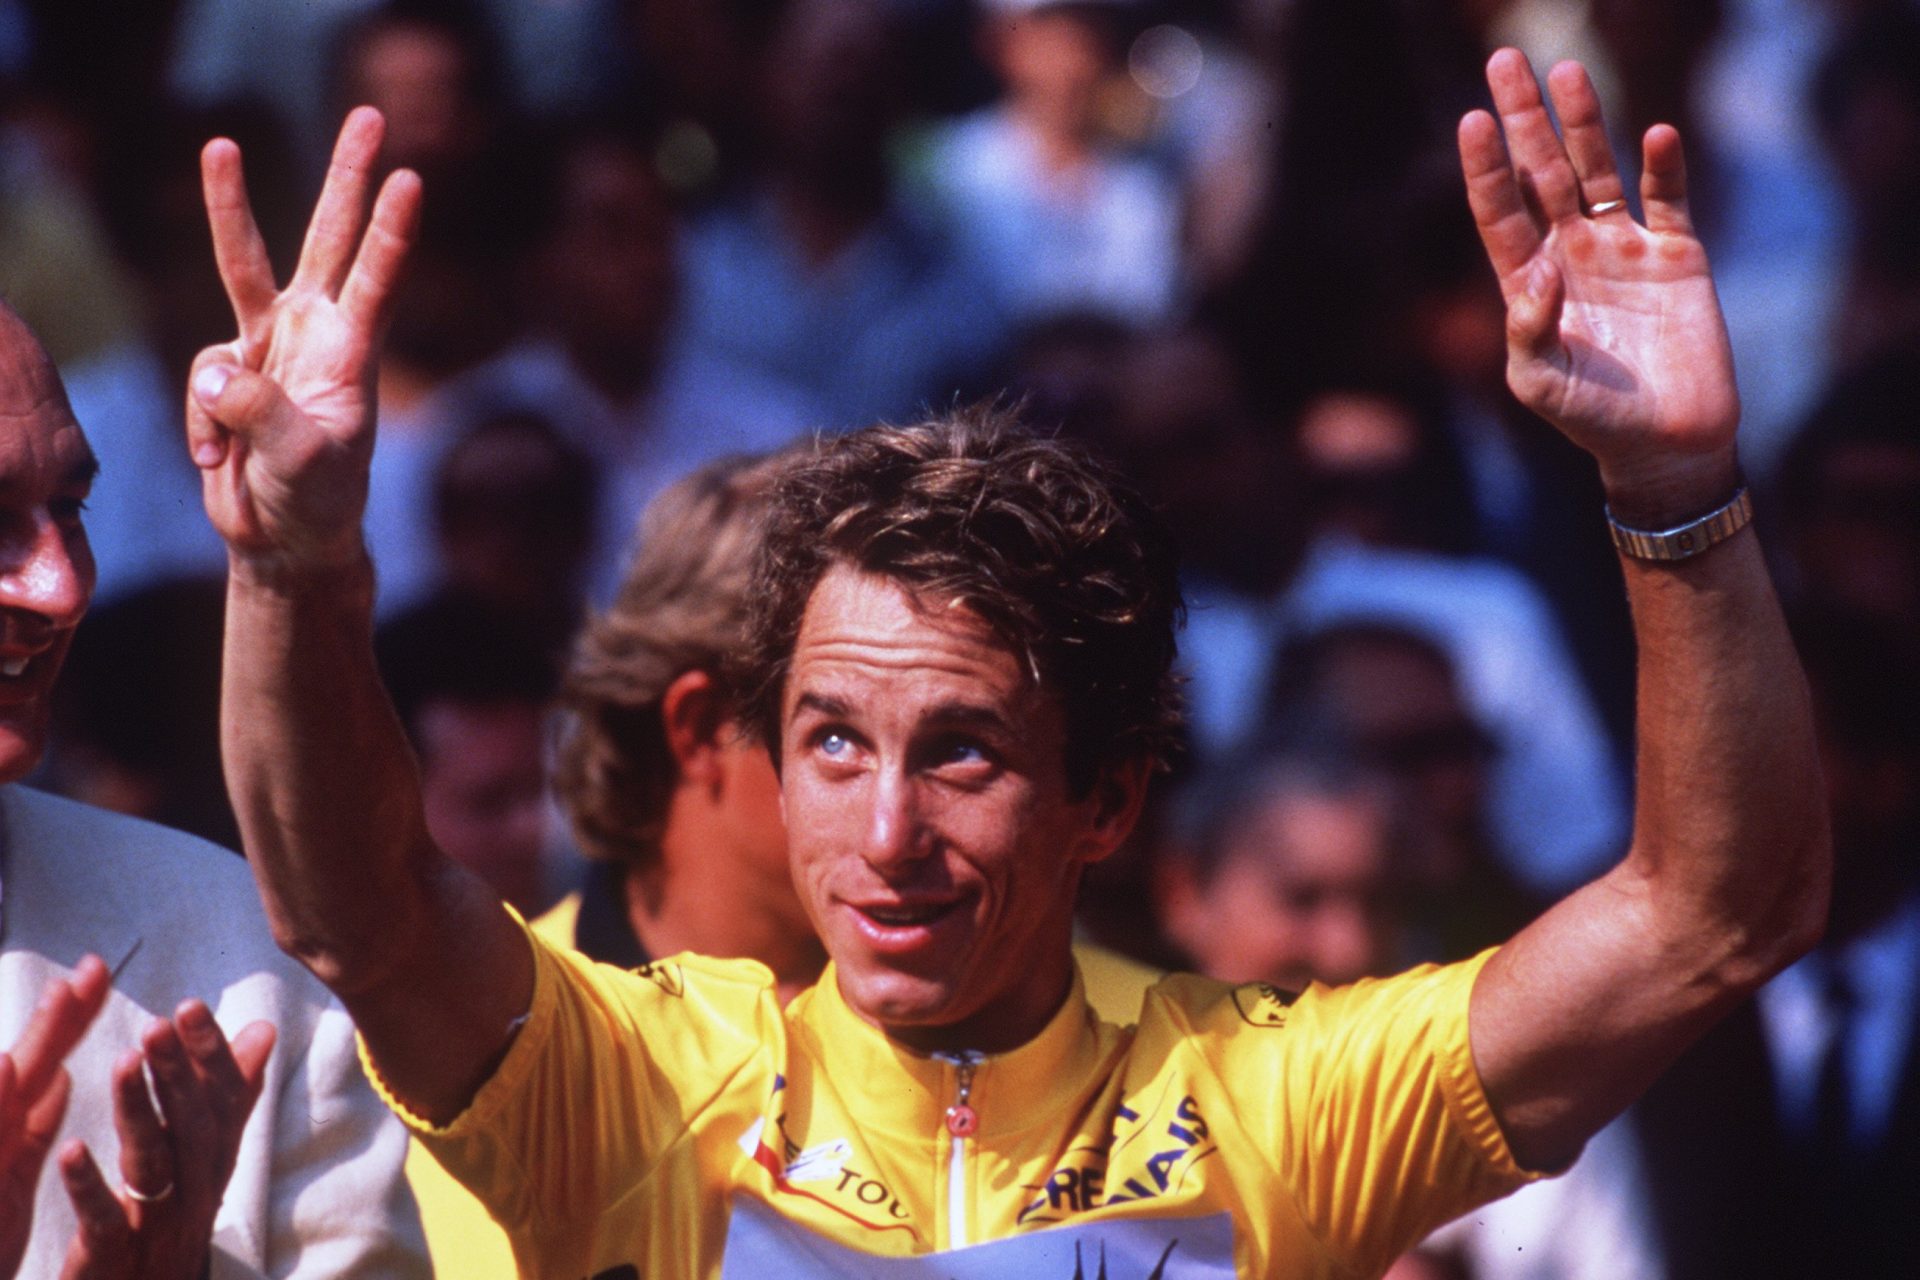 A lost Greg LeMond